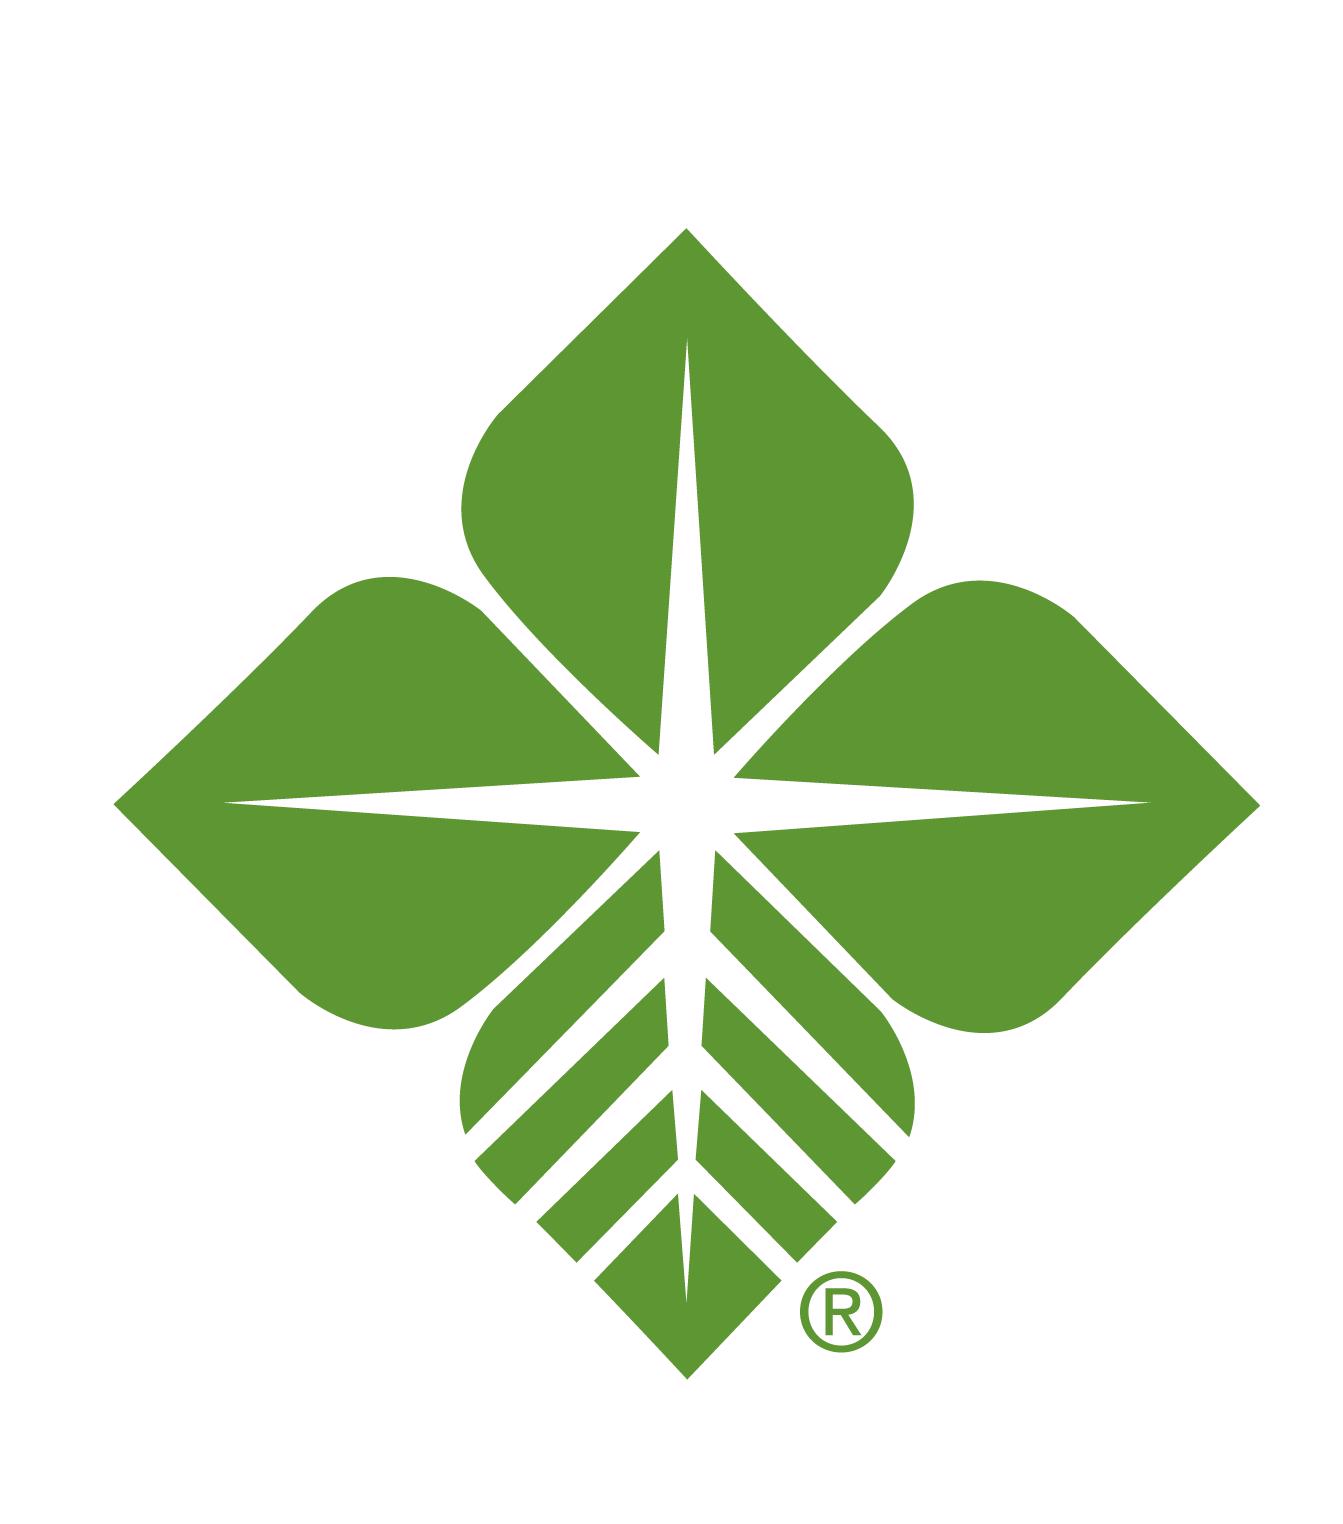 Farm Credit biostar emblem